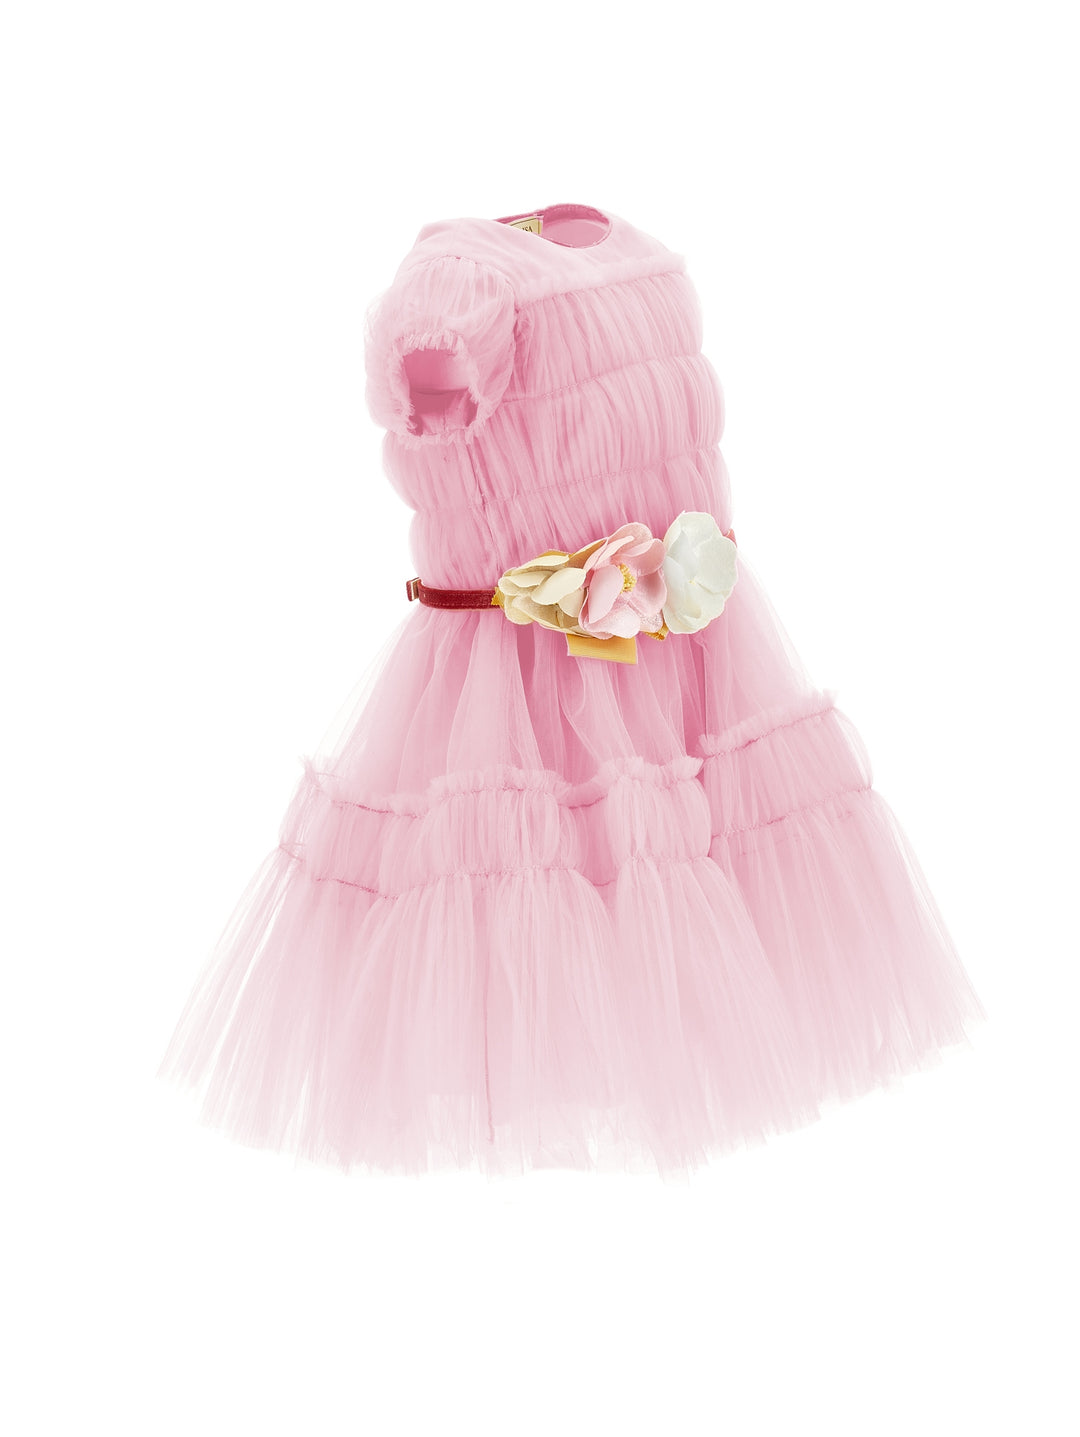 Robe fille en tulle rose avec application de ceinture